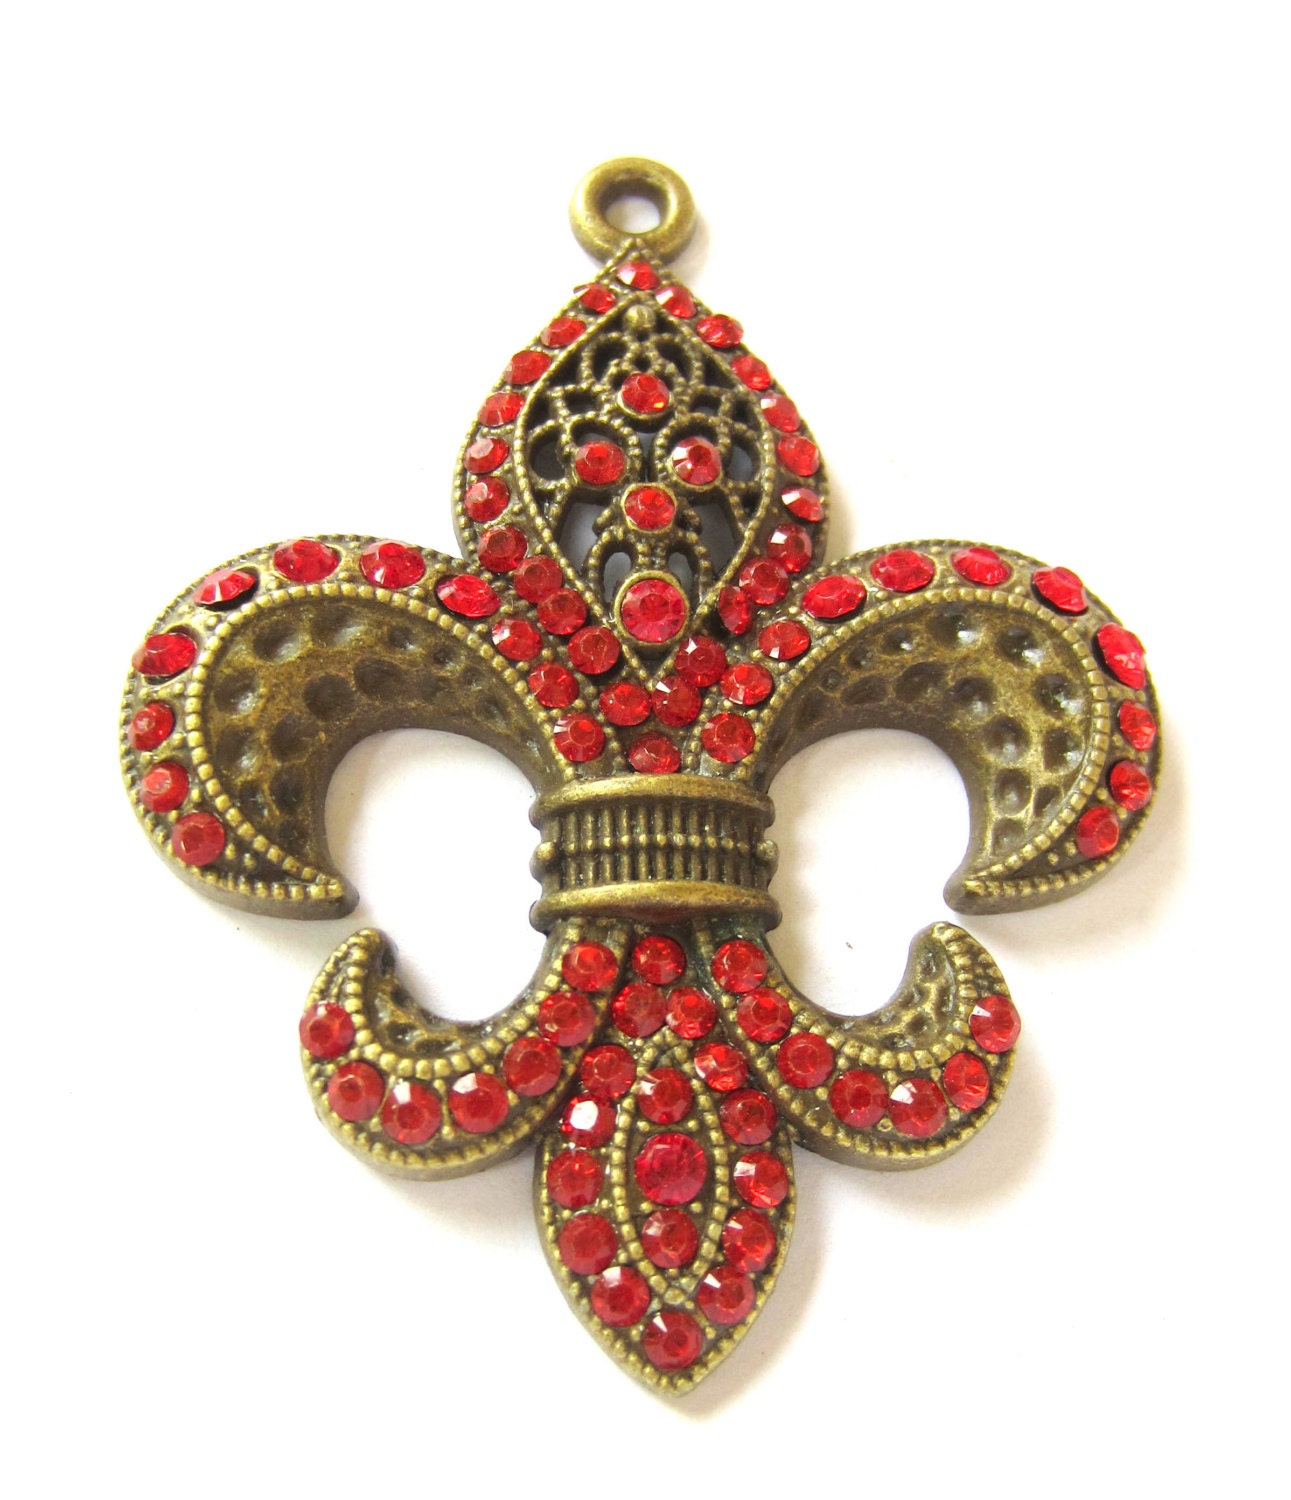 Focal Fluer De Lis pendant antique bronze charm red rhinestones jewelry enhancer 63mm x 82mm 7mm  B0452